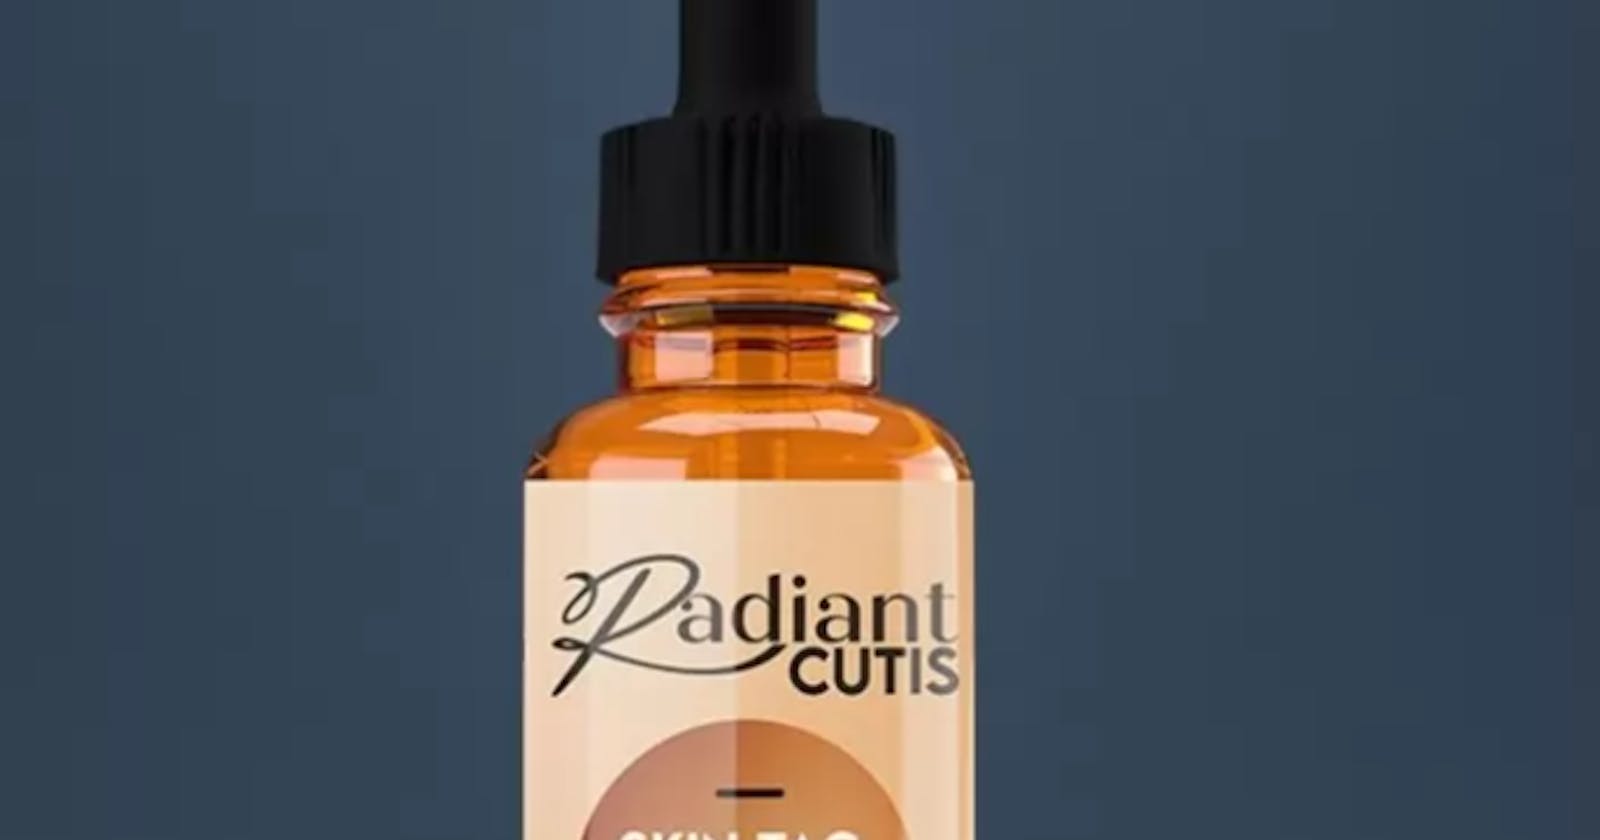 Radiant Cutis Skin Tag Remover Reviews, Amazon, Website, Reddit, Ingredients?